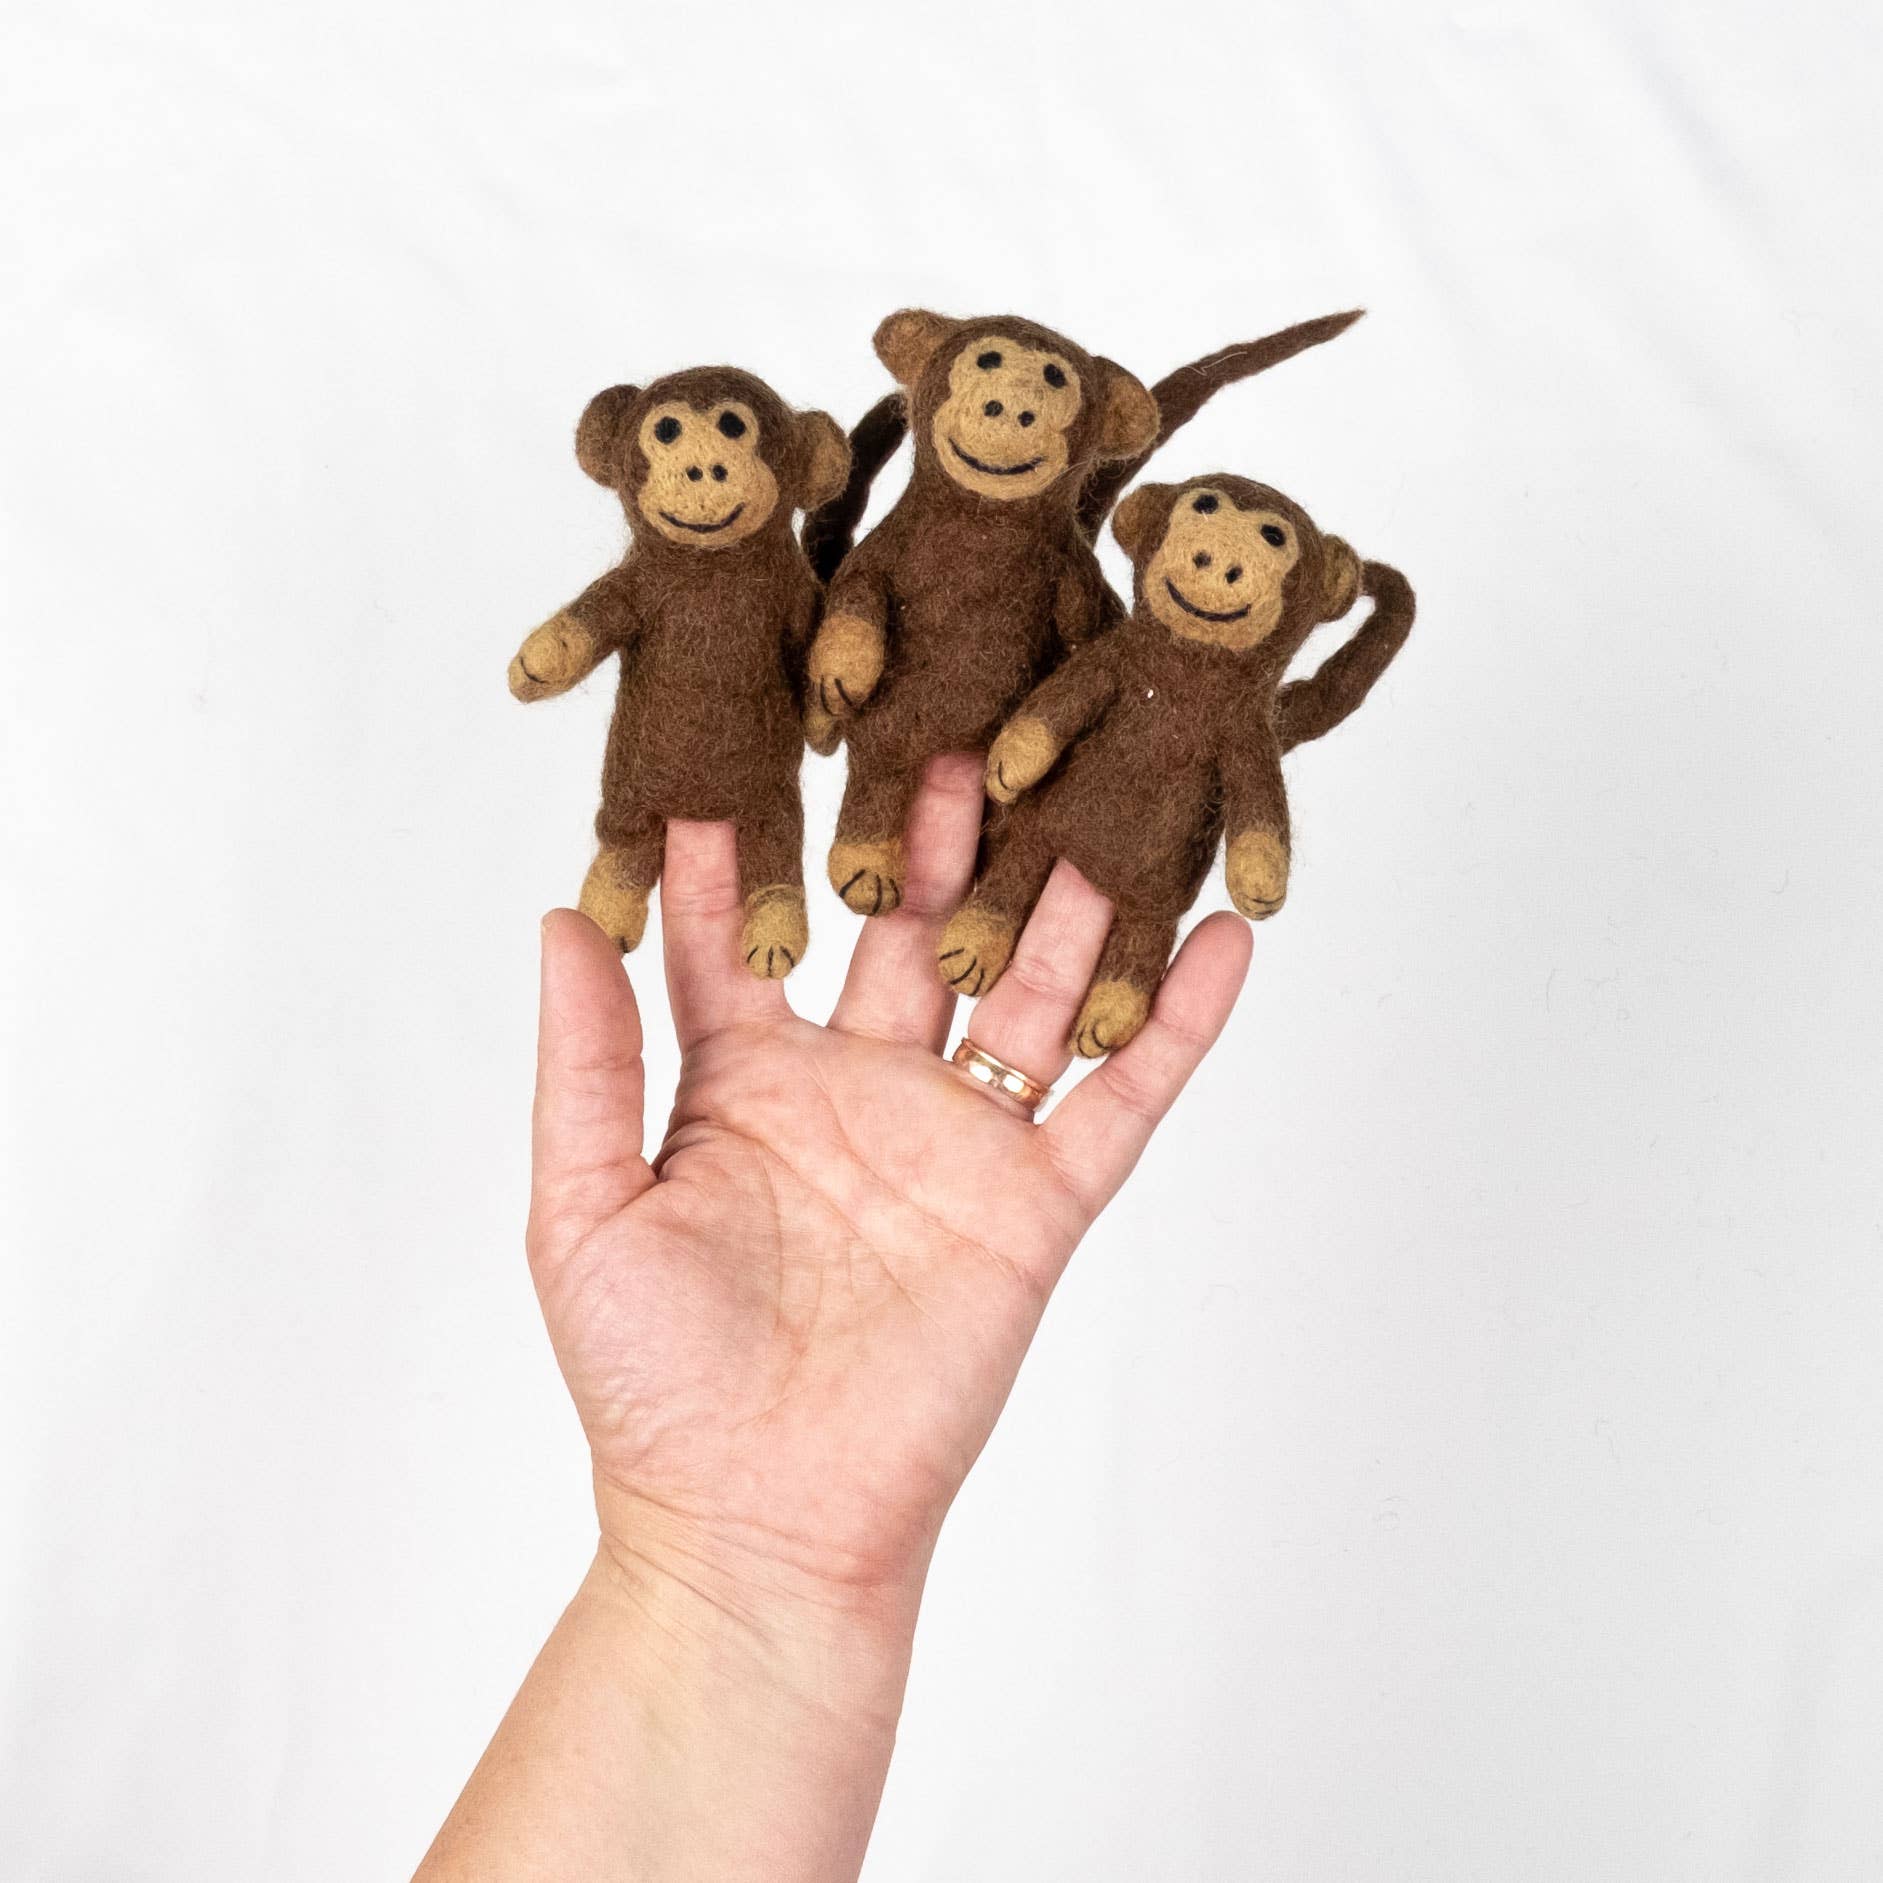 Monkey Felt Finger Puppet- Sold individually